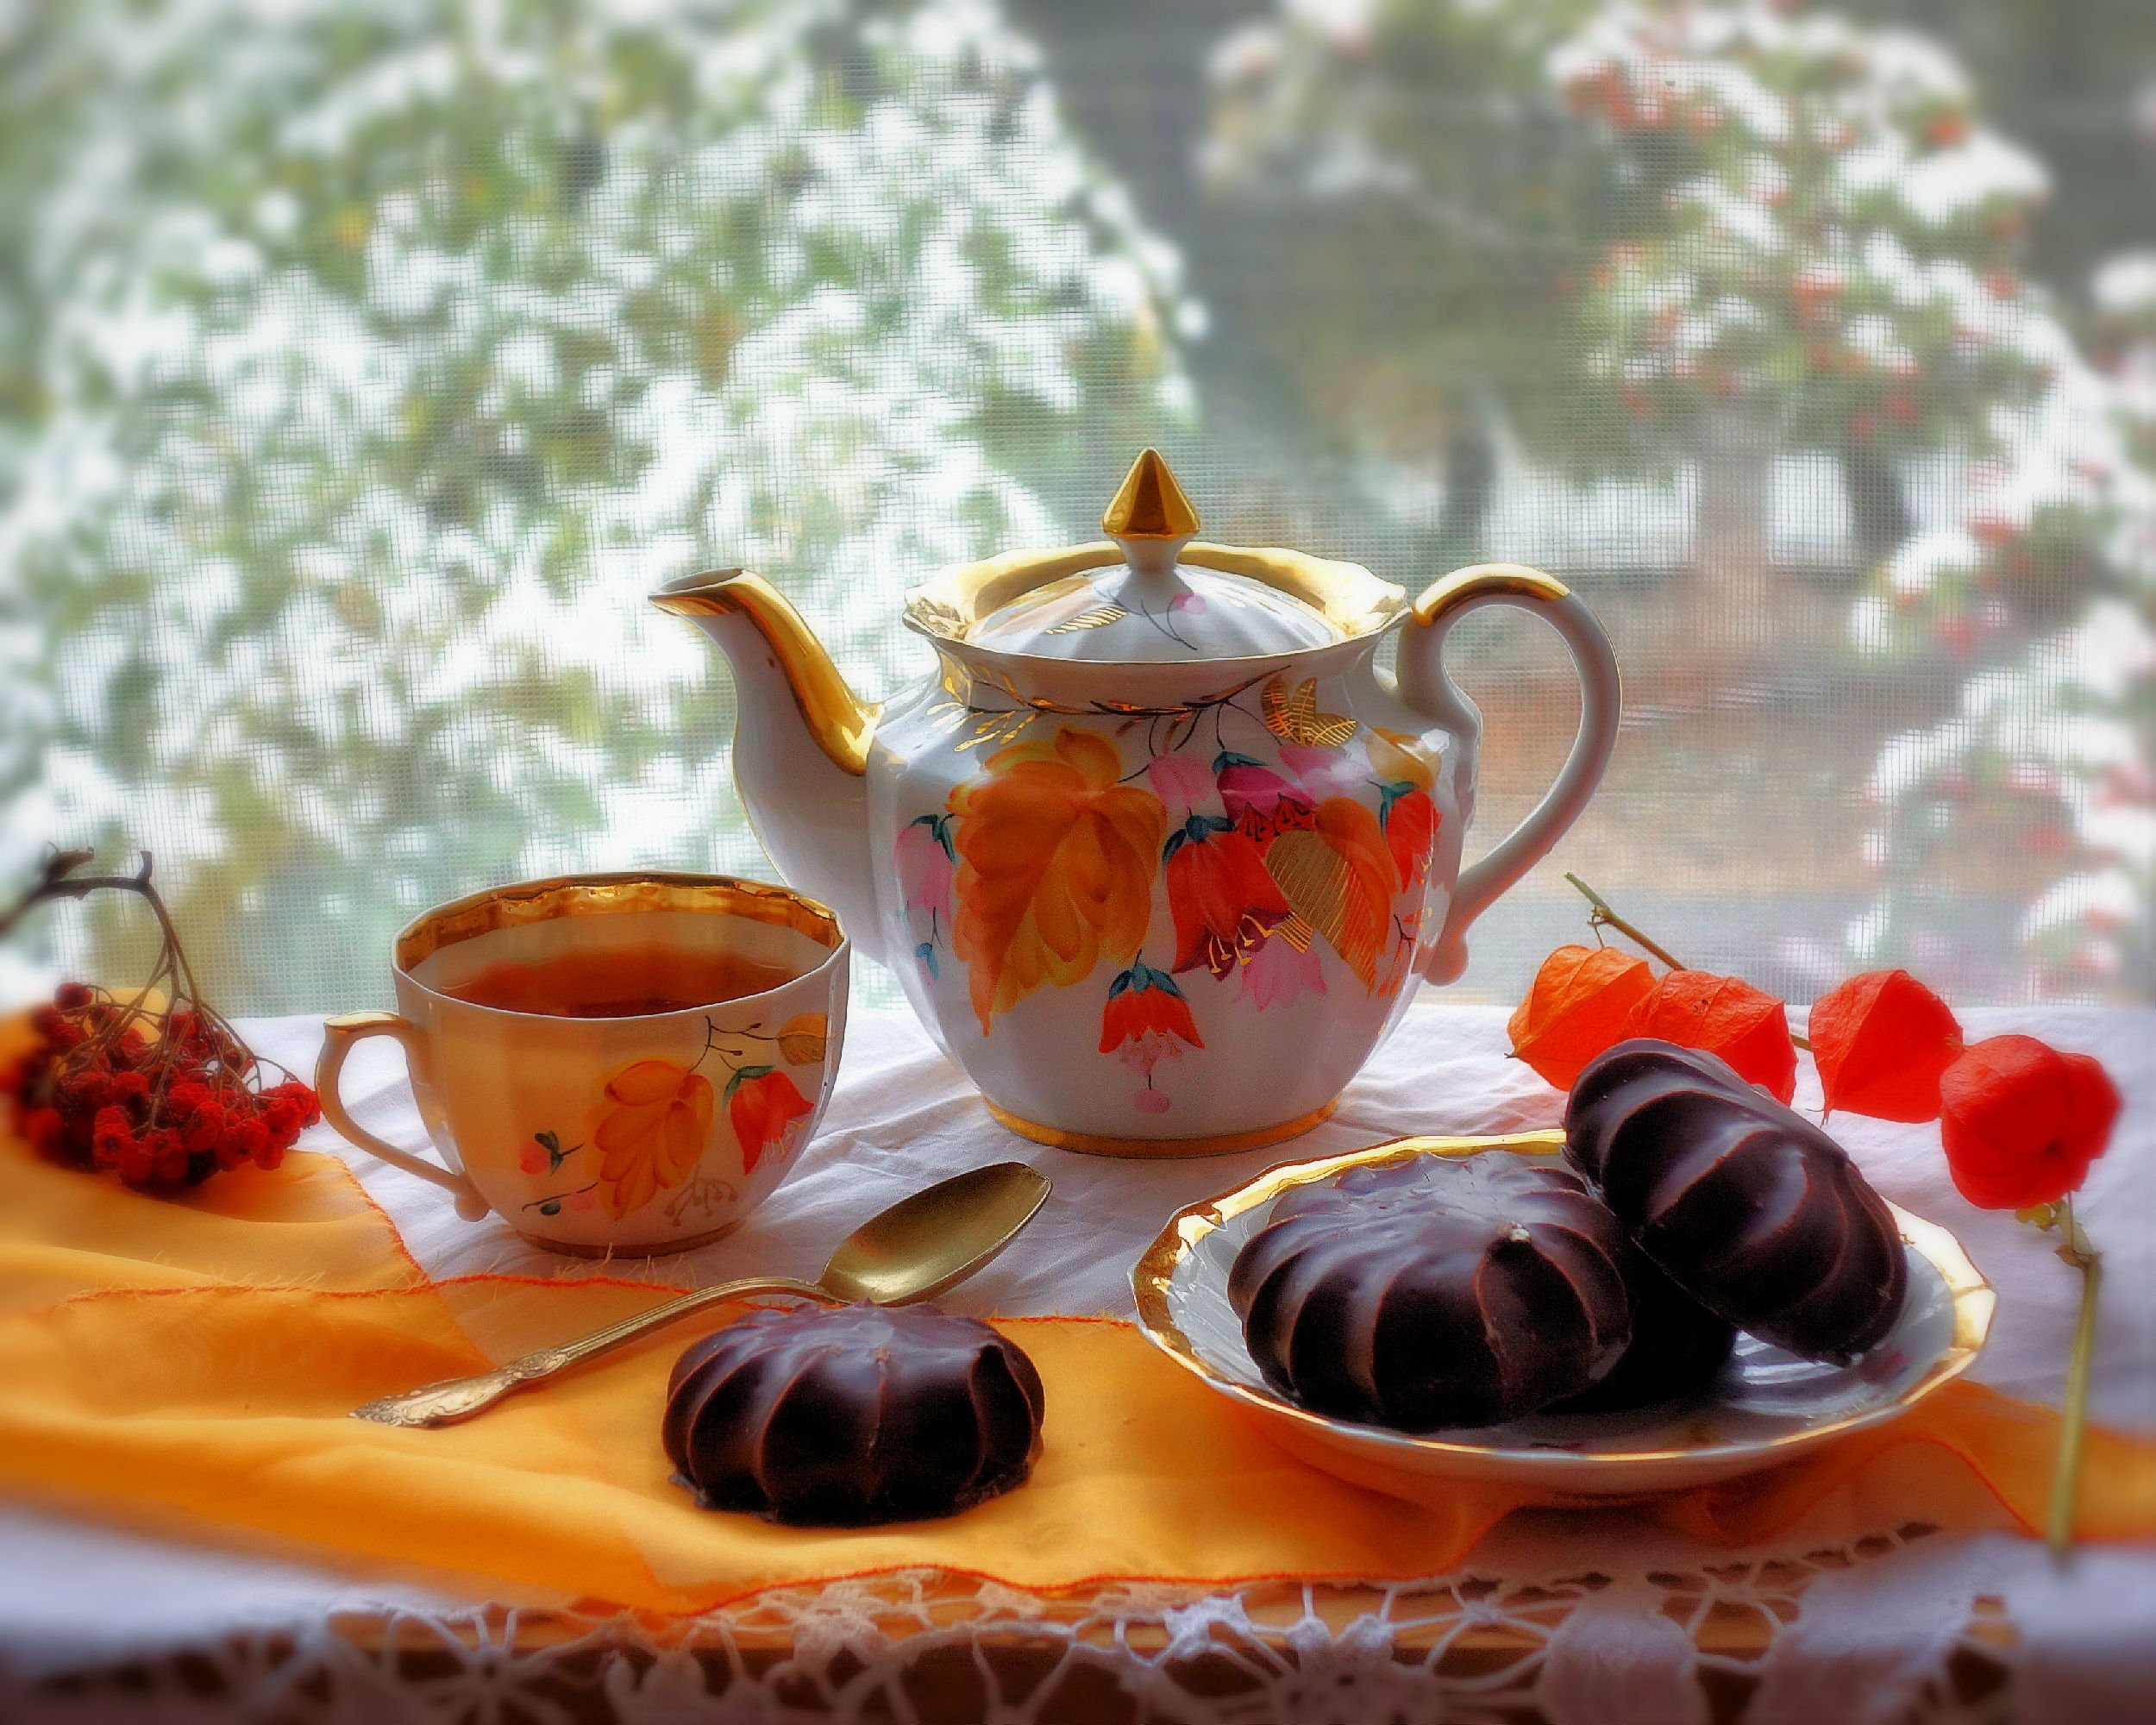 Красивое чаепитие картинки. Натюрморт чаепитие. Осеннее чаепитие. Натюрморт с чашкой чая. Утреннее чаепитие.